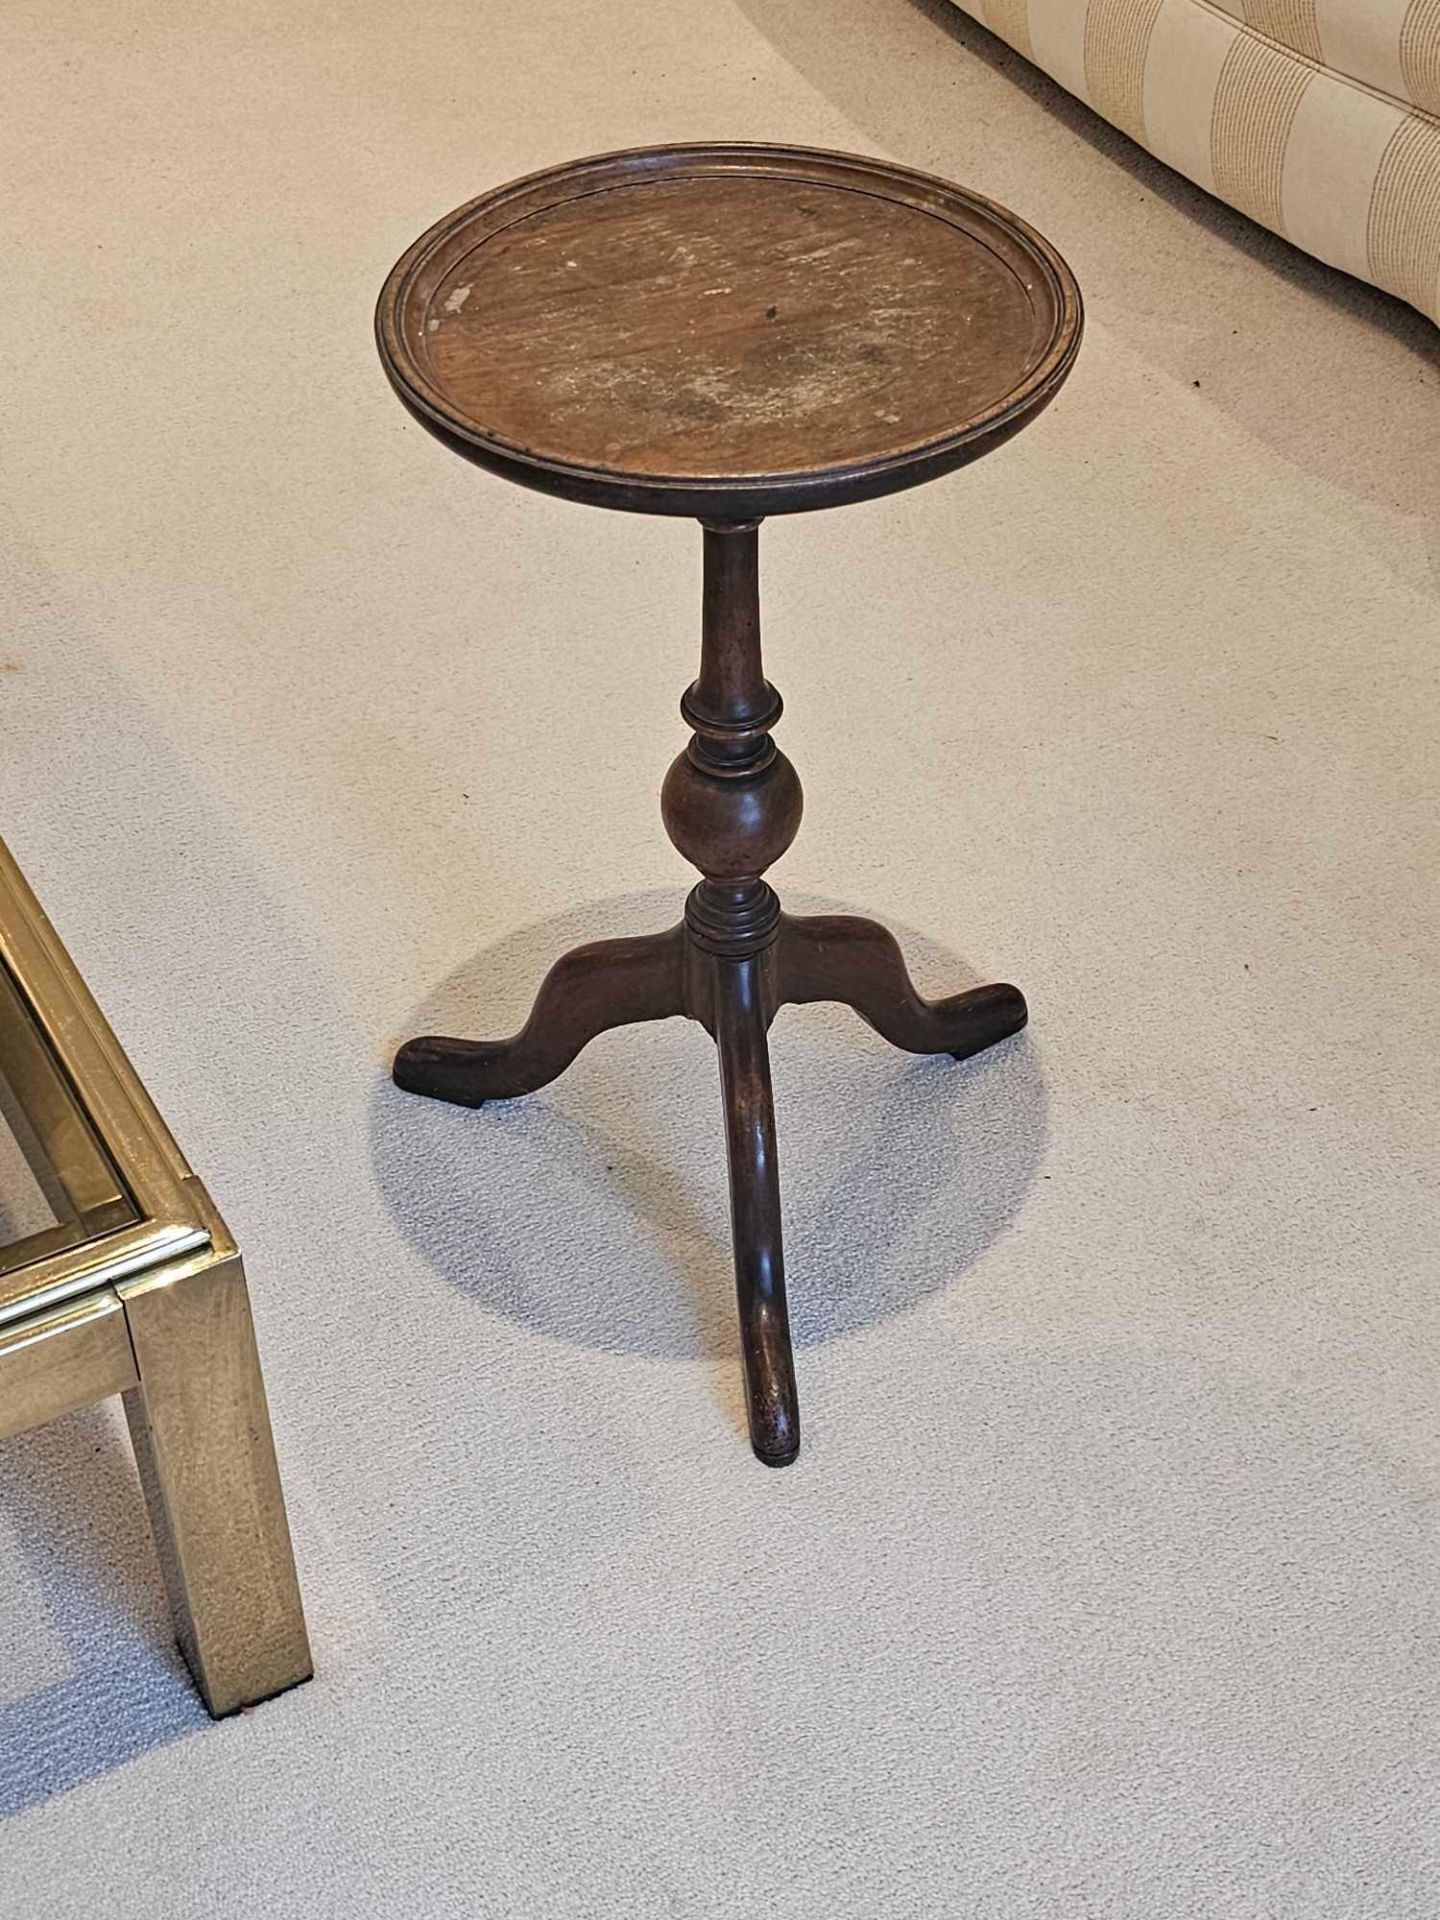 A Mid Century Mahogany Circular Tripod Wine Table 30cm Diameter X 54cm High - Image 2 of 2